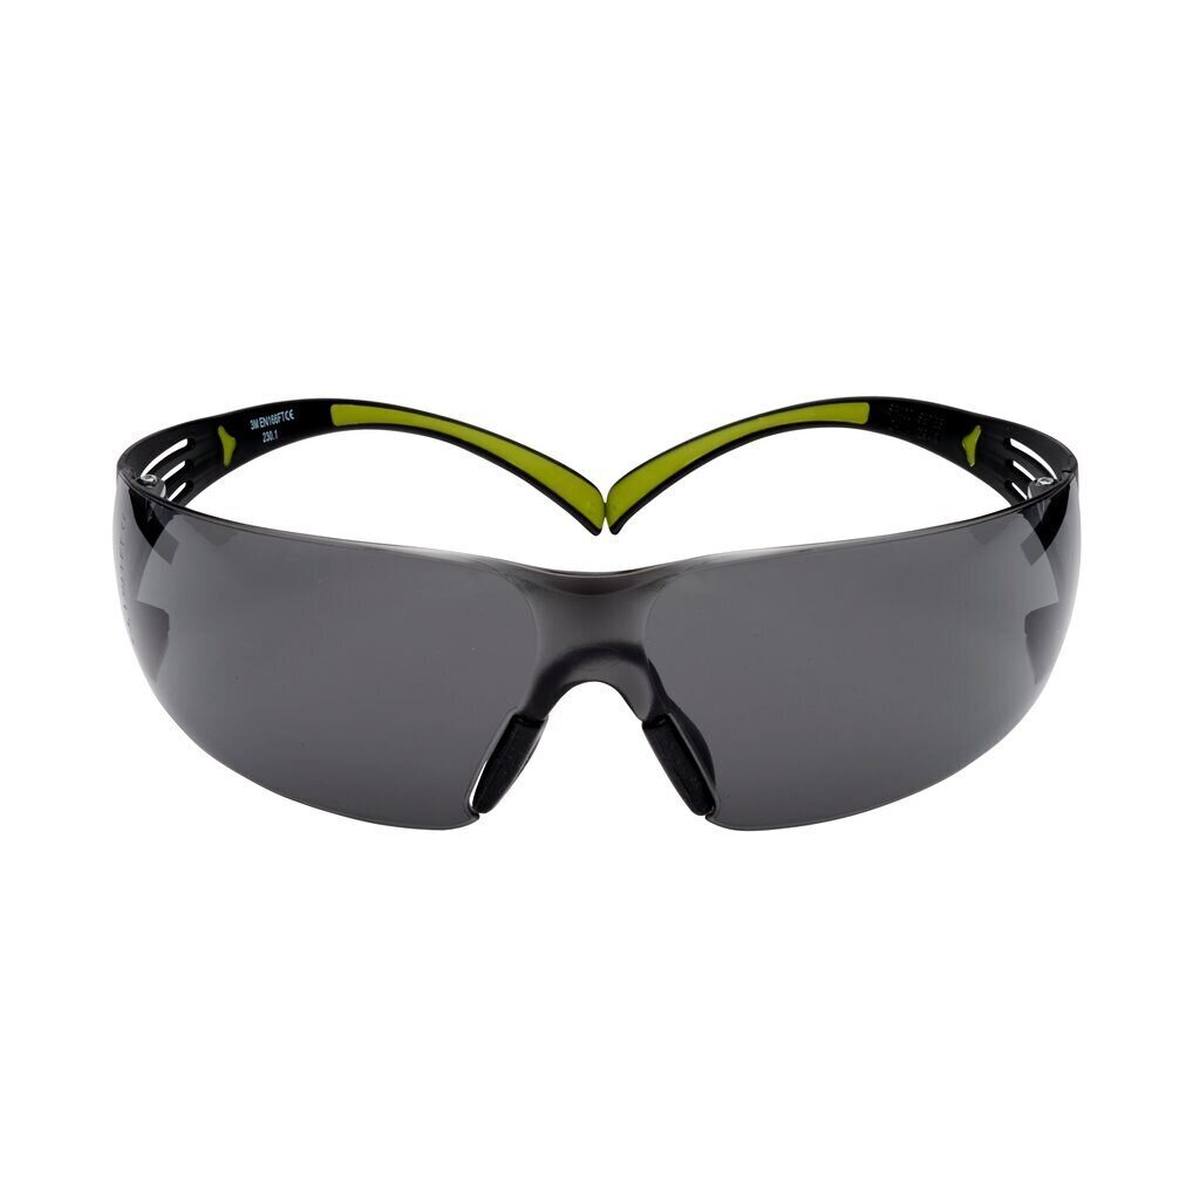 3M SecureFit 400 safety spectacles, black/green temples, anti-scratch/anti-fog coating, grey lens, SF402AS/AF-EU